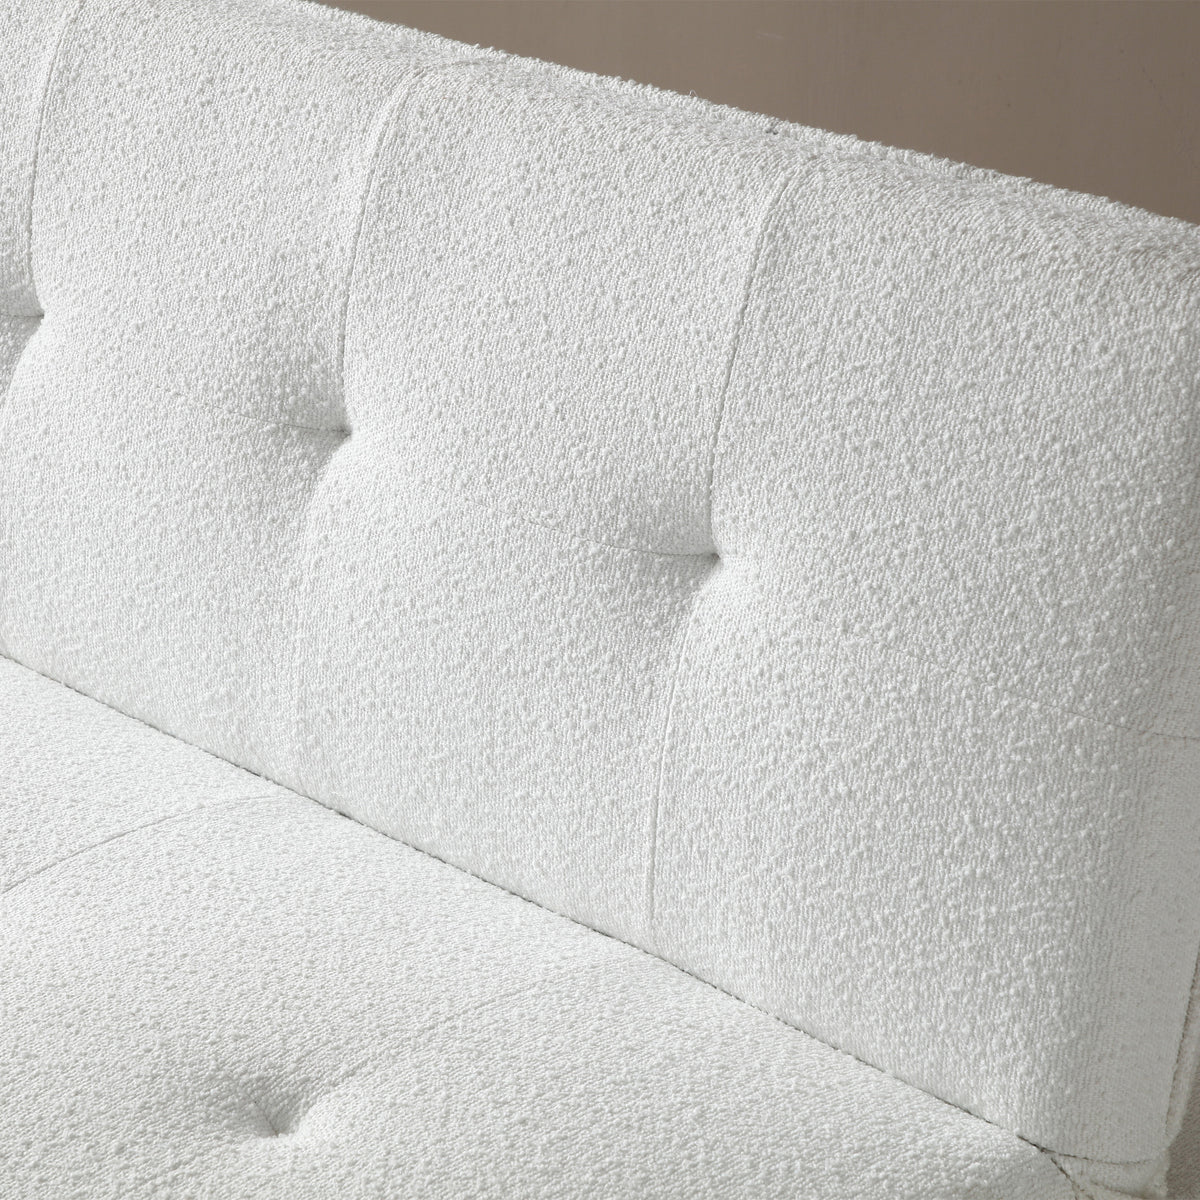 Flynn Cream Boucle Clik Clak Sofa Bed by Roseland Furniture